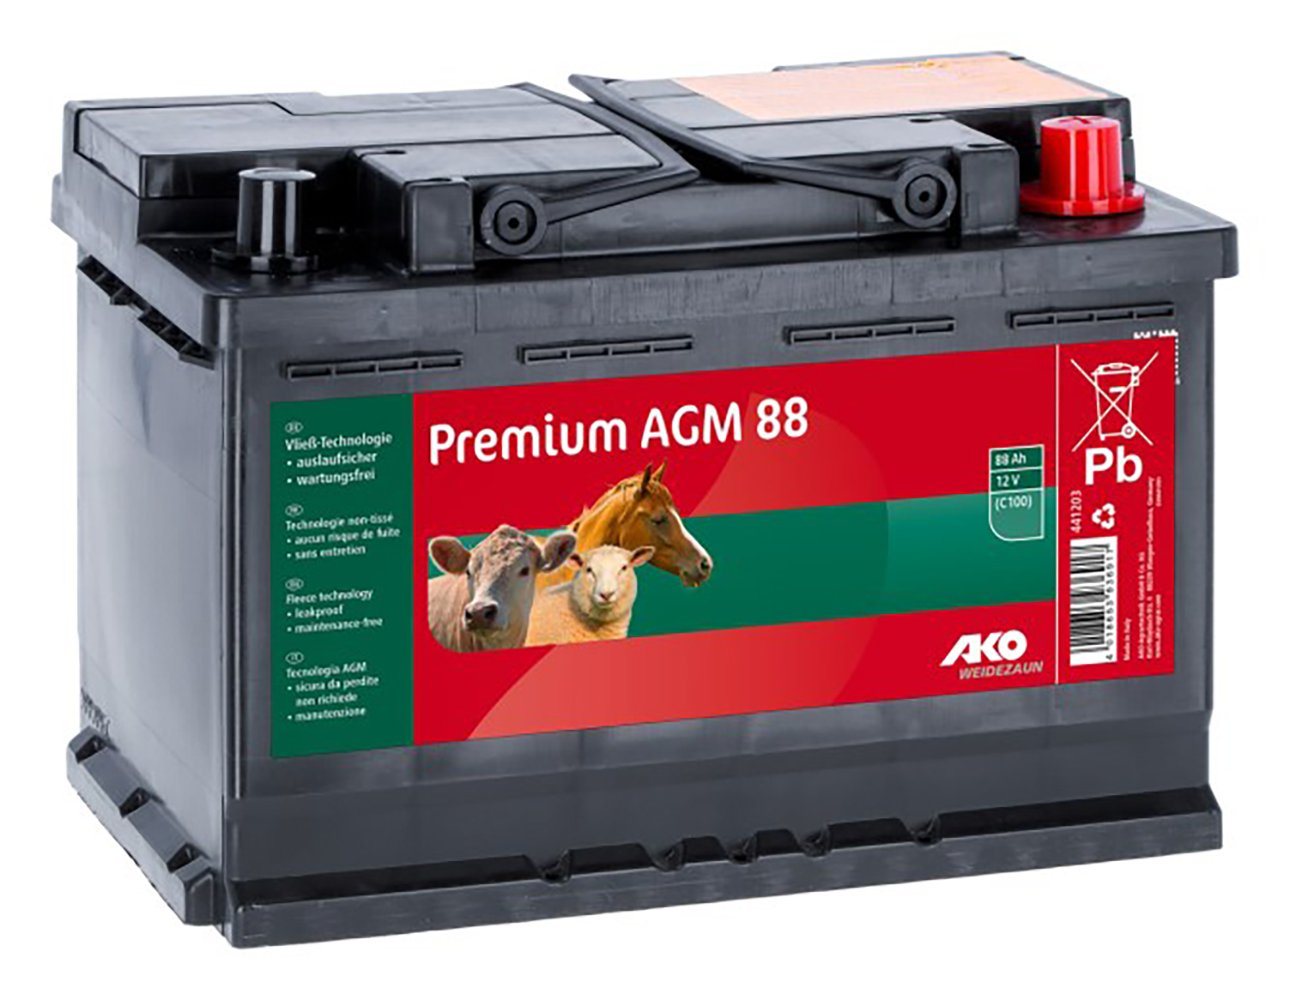 Kerbl Weidenzaun Kerbl AKO Premium AGM Batterie, 88 AH (C100), 441203 von Kerbl